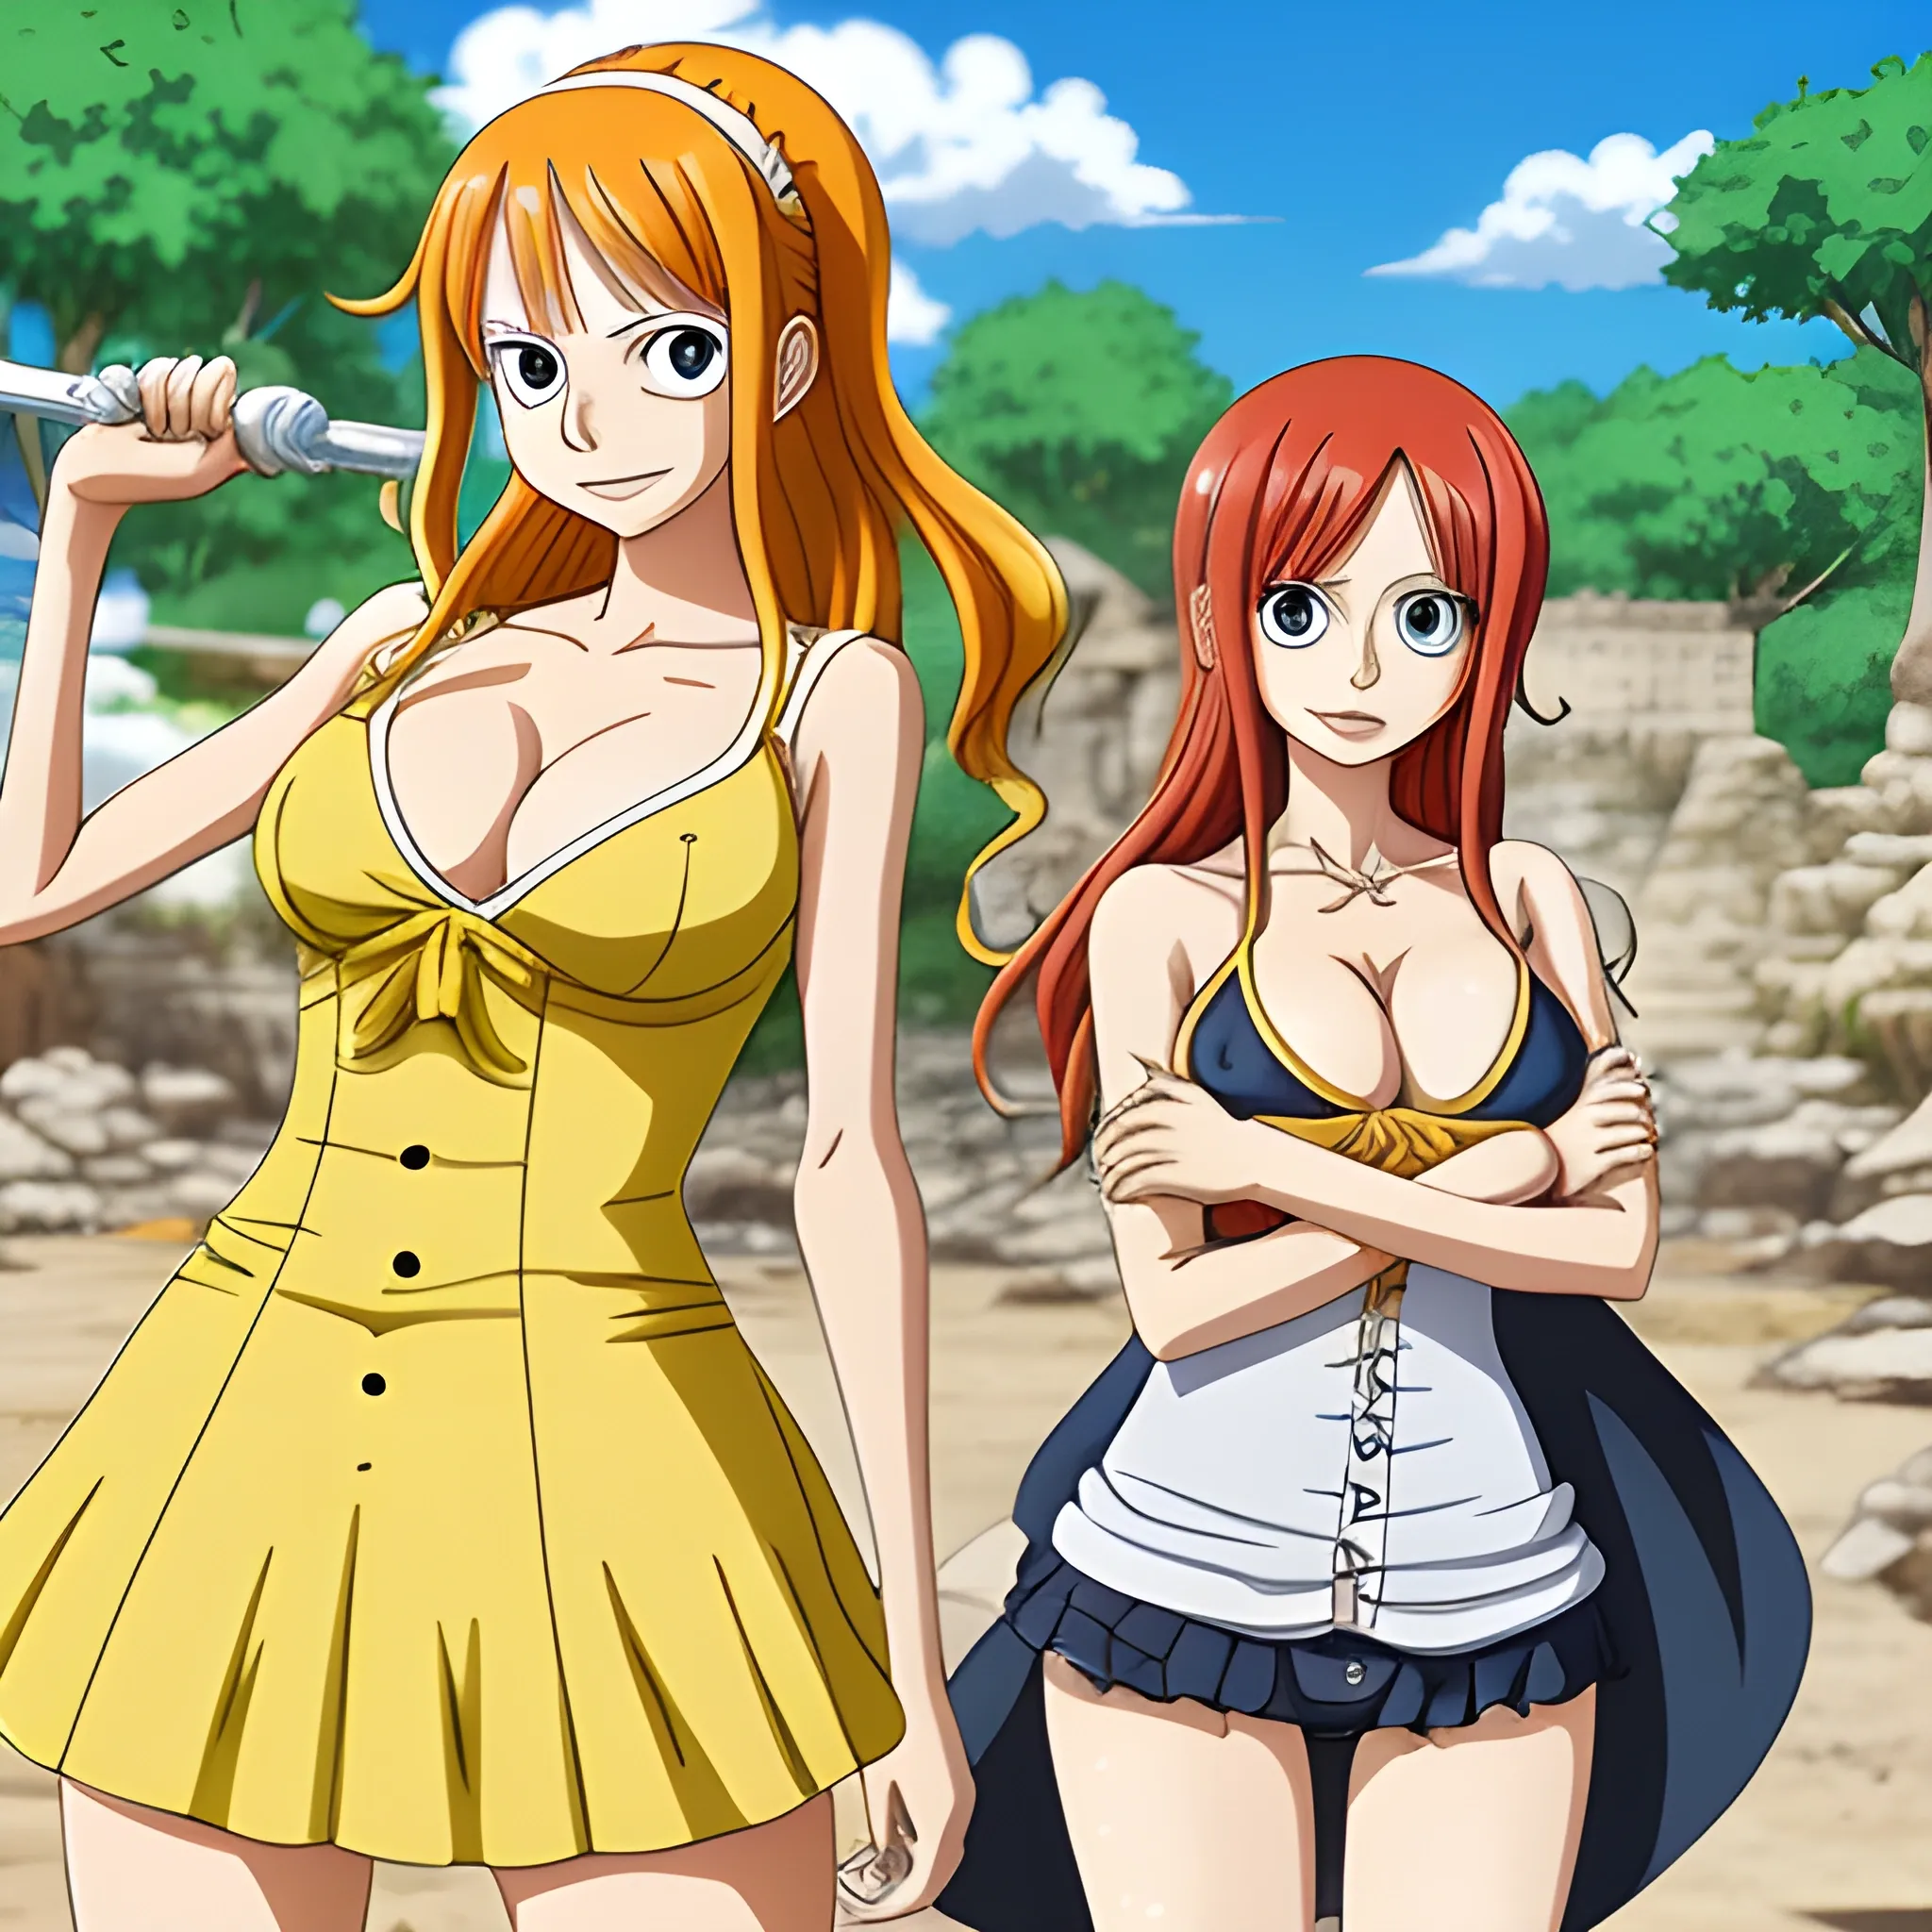 Pocket of lemons, One Piece, Anime, Nami, Robin